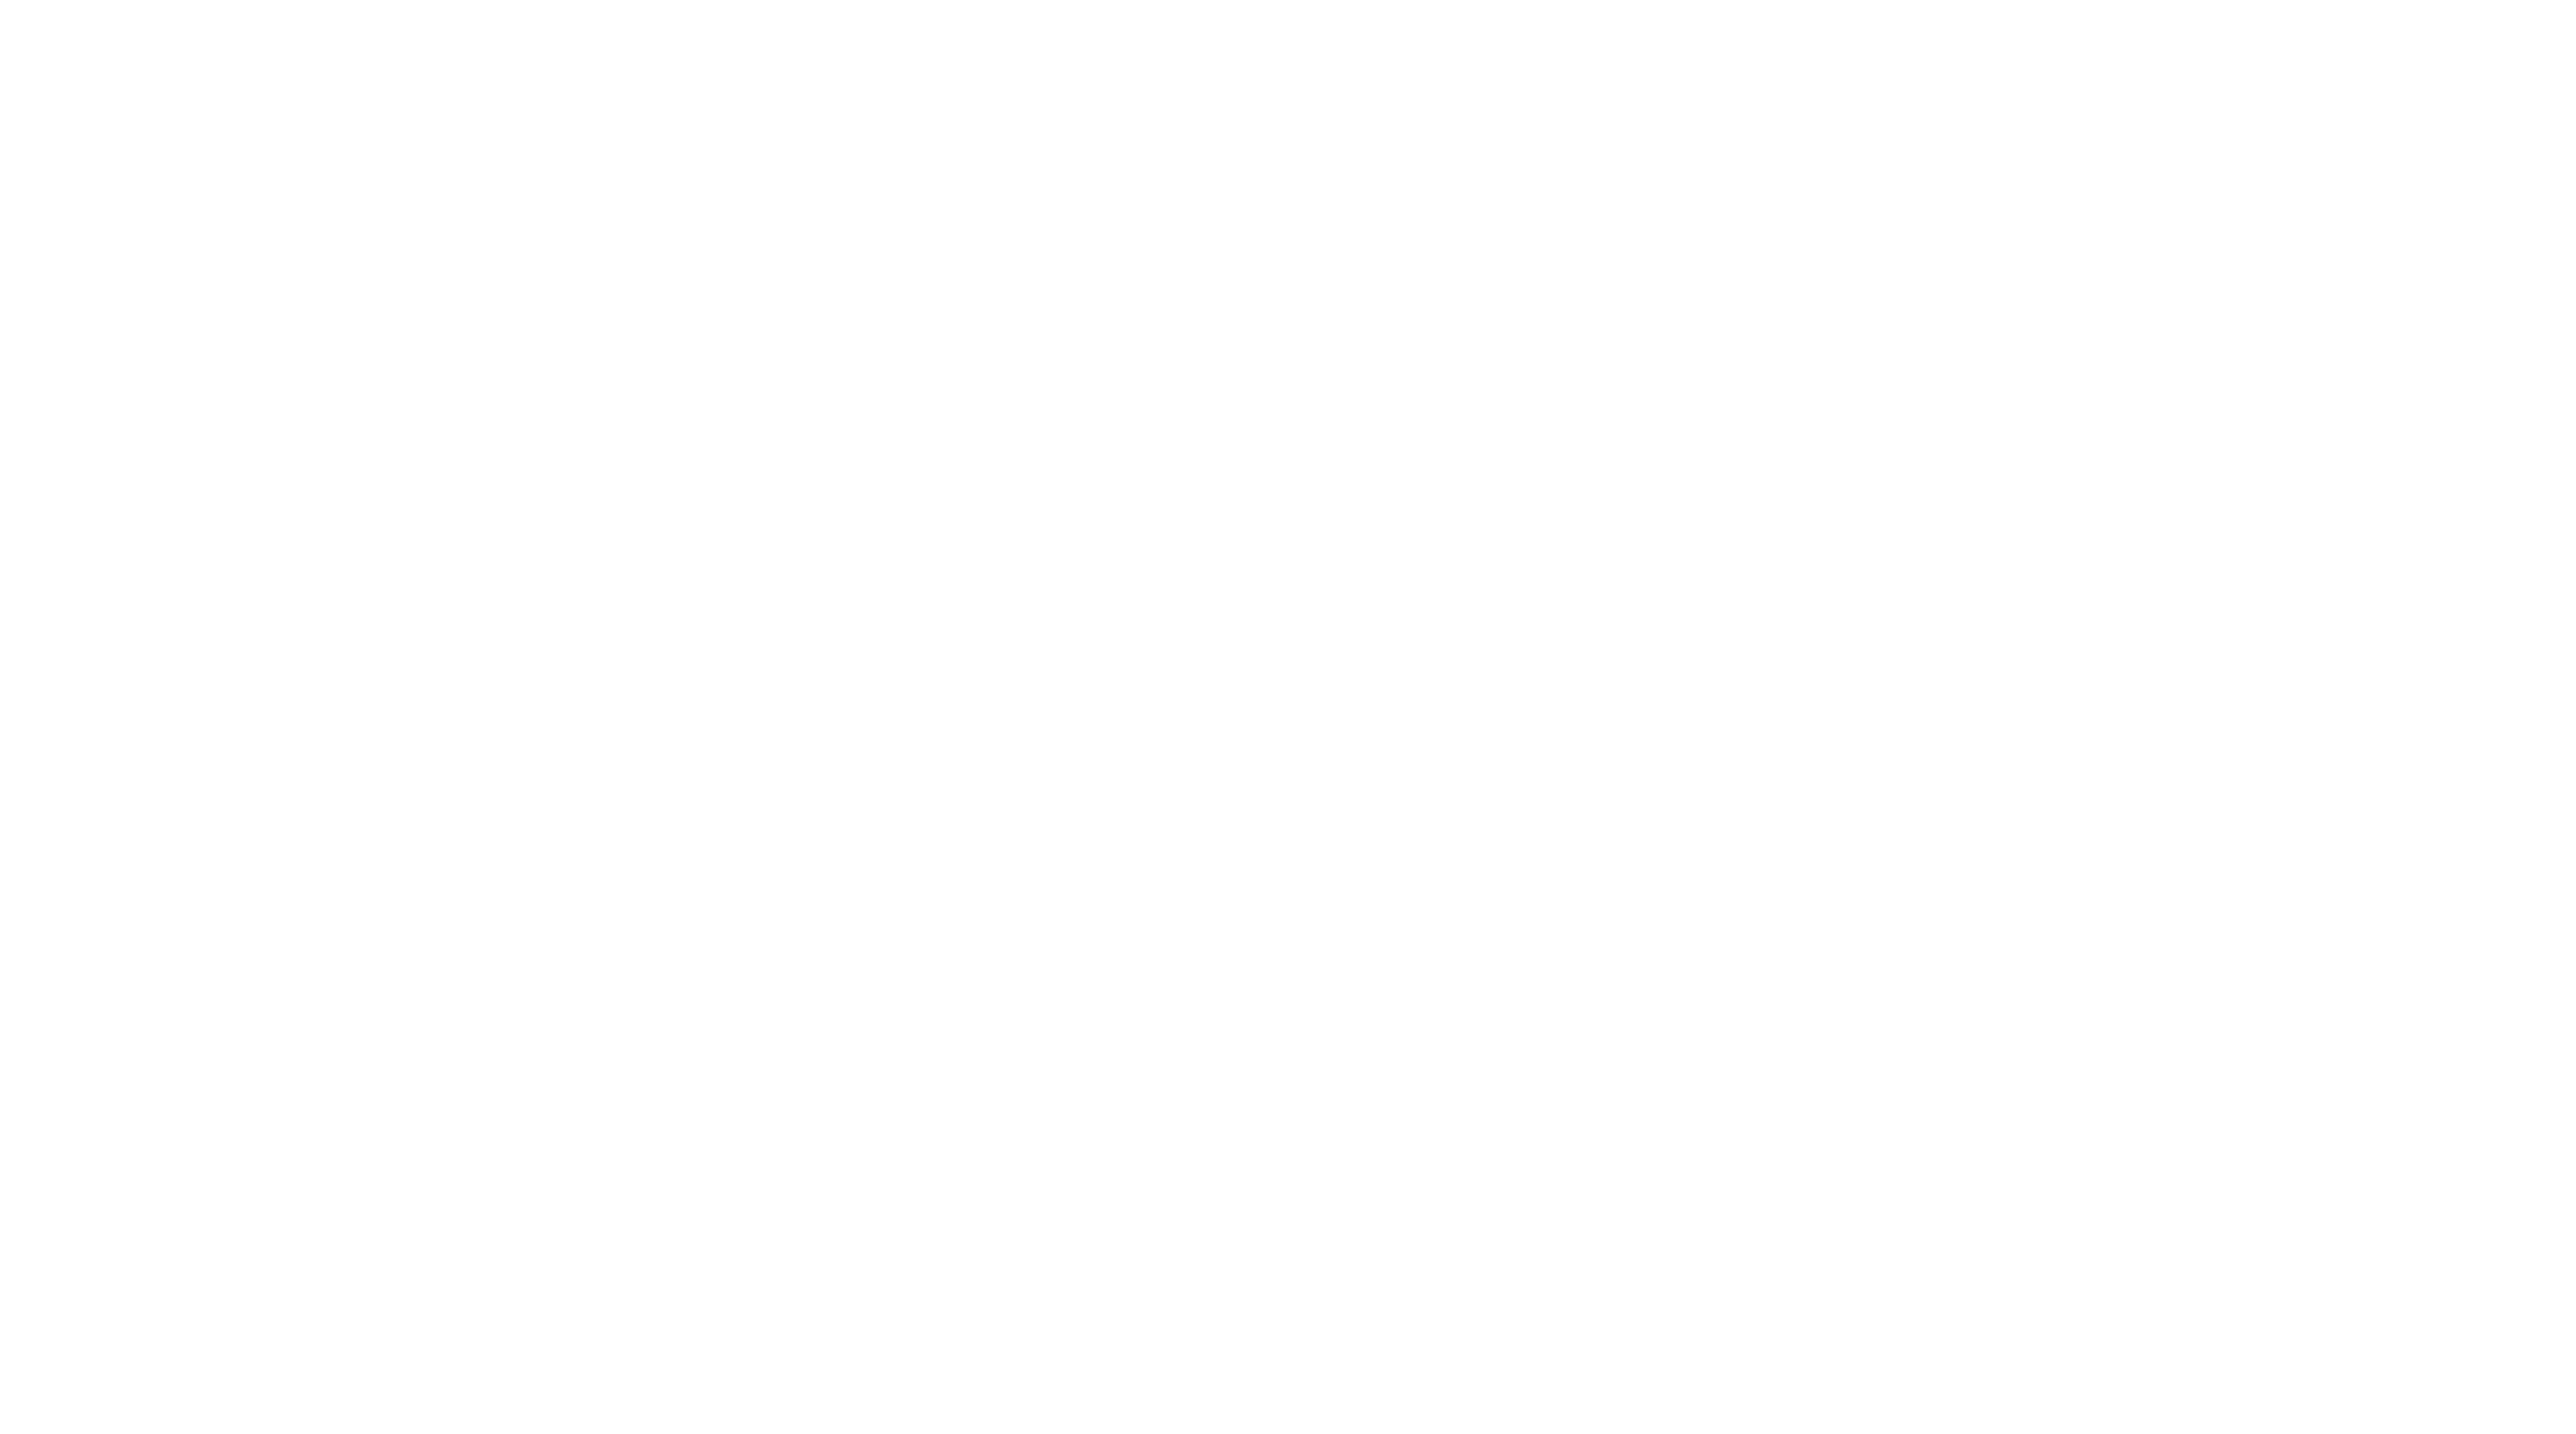 Cappuccini Italiani